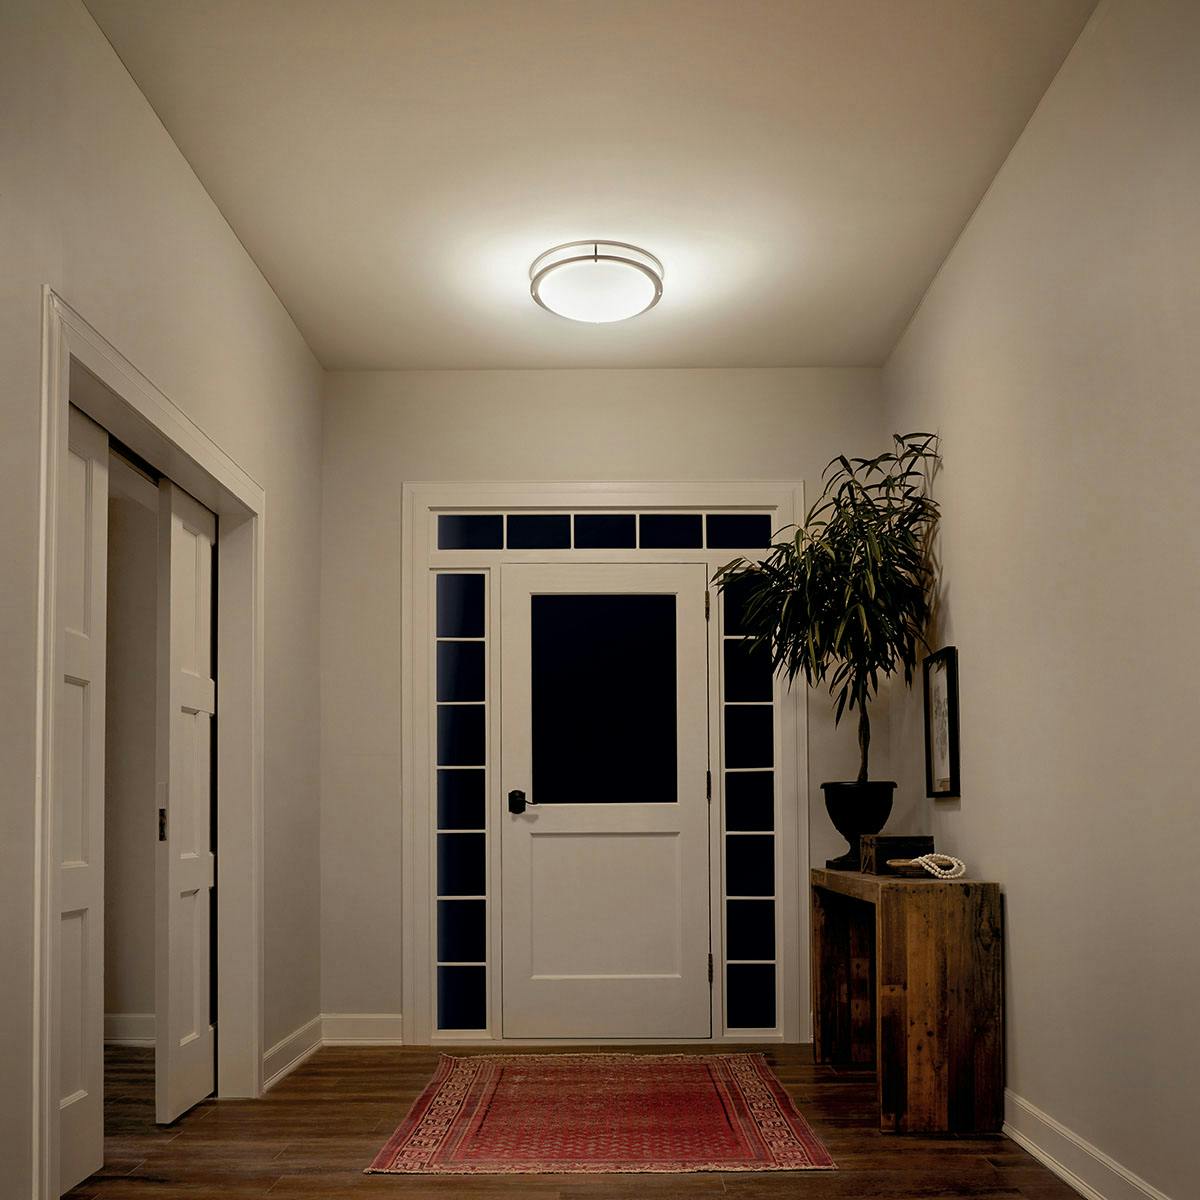 Night time Hallway image featuring Avon flush mount light 10789NILED